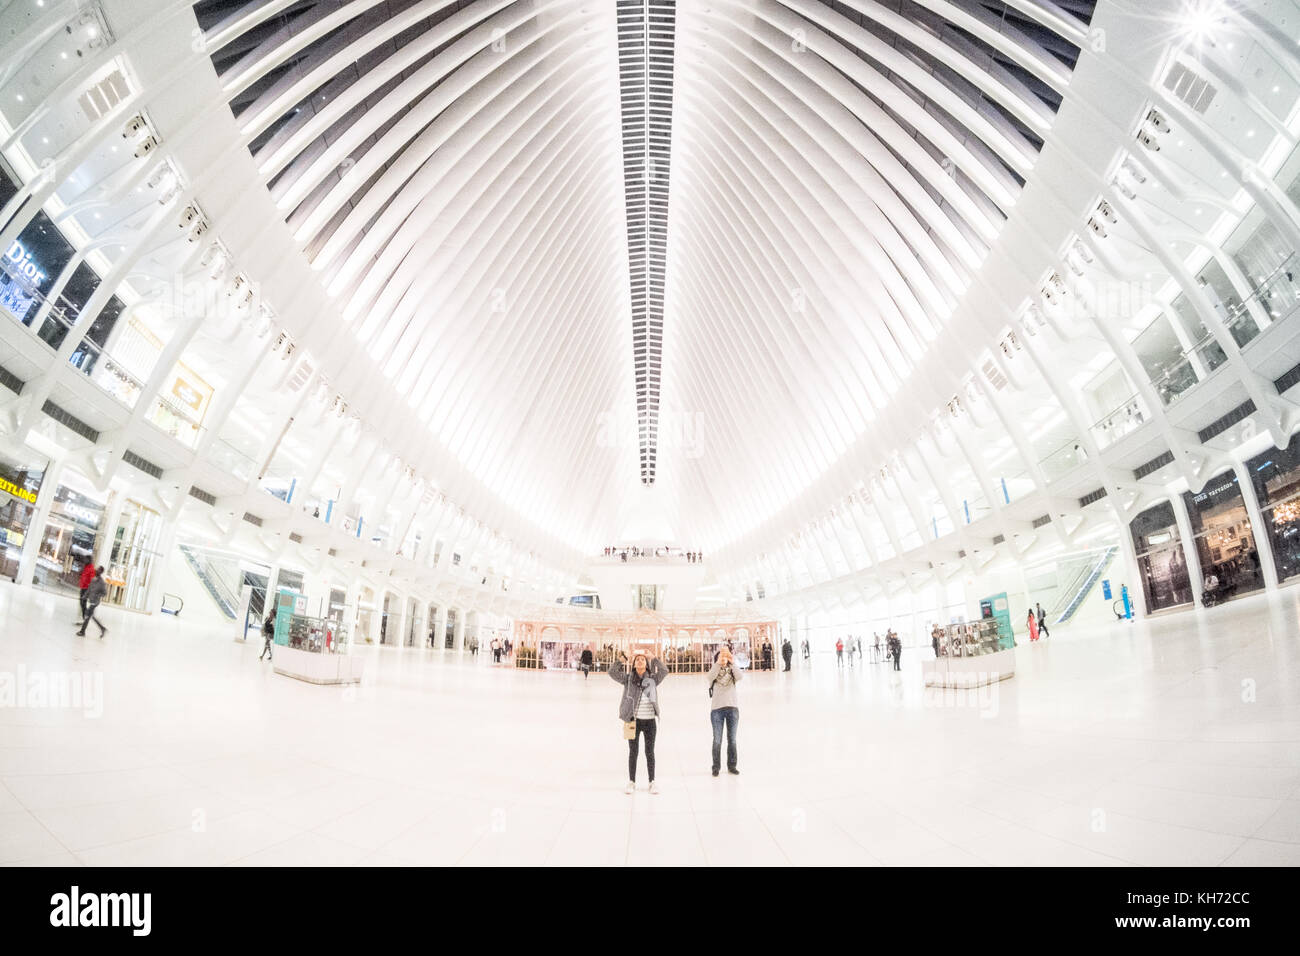 The Oculus transportation hub and shopping mall, Lower Manhattan, New York City, NY,United States of America, USA. Stock Photo